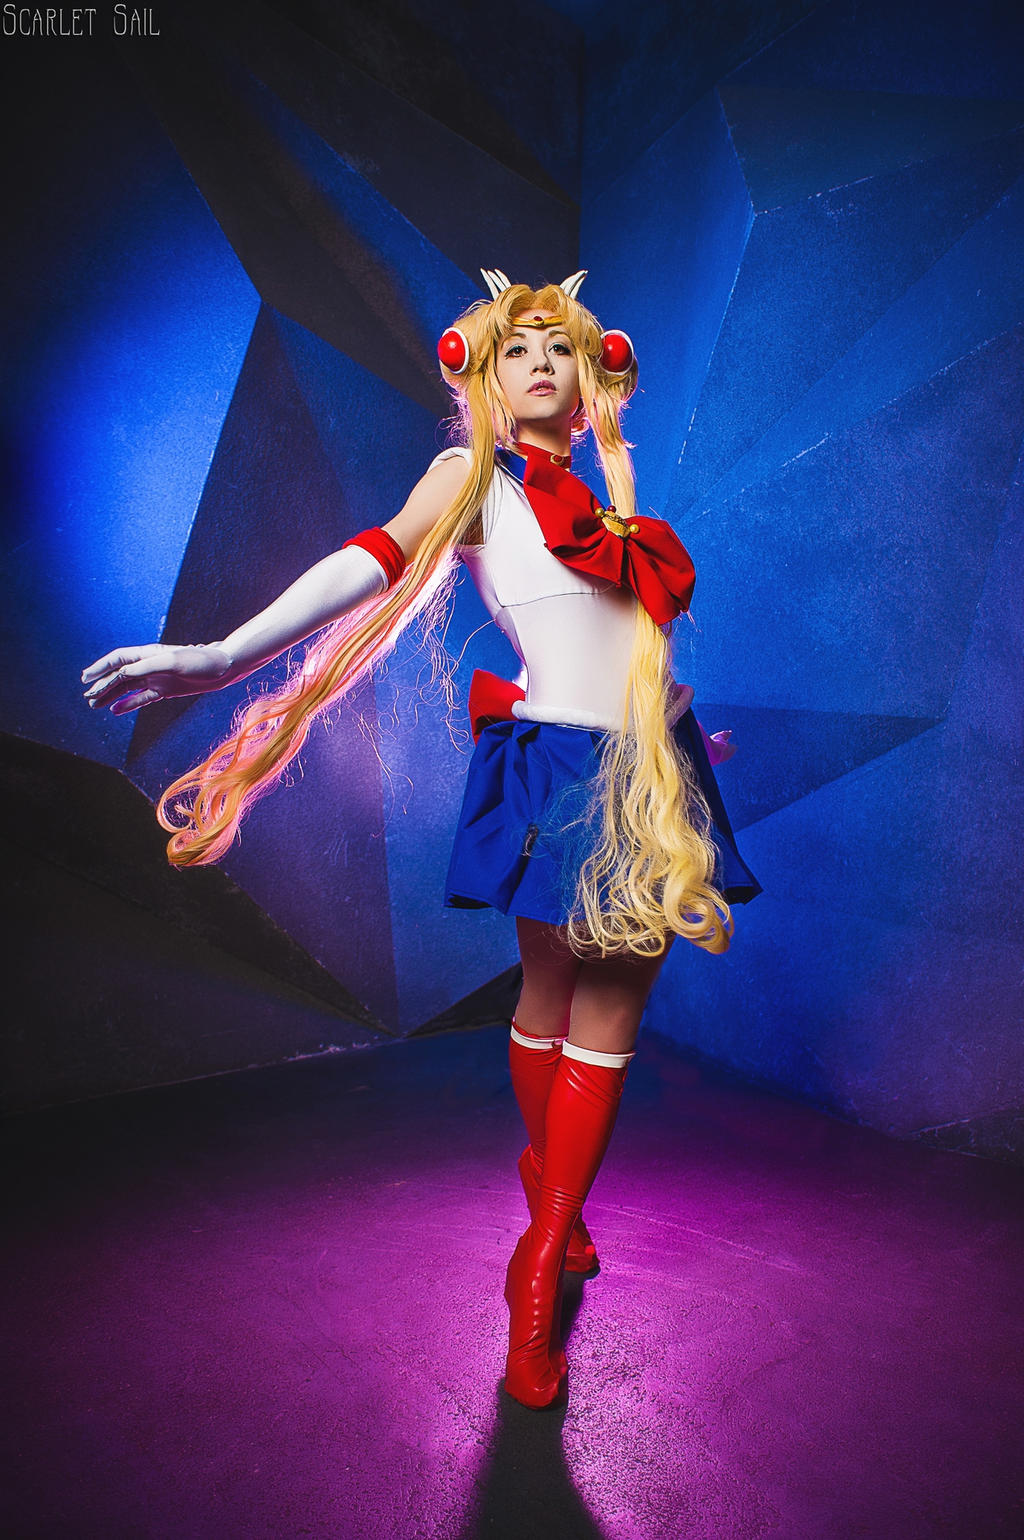 Sailor moon by Nastarelie on DeviantArt